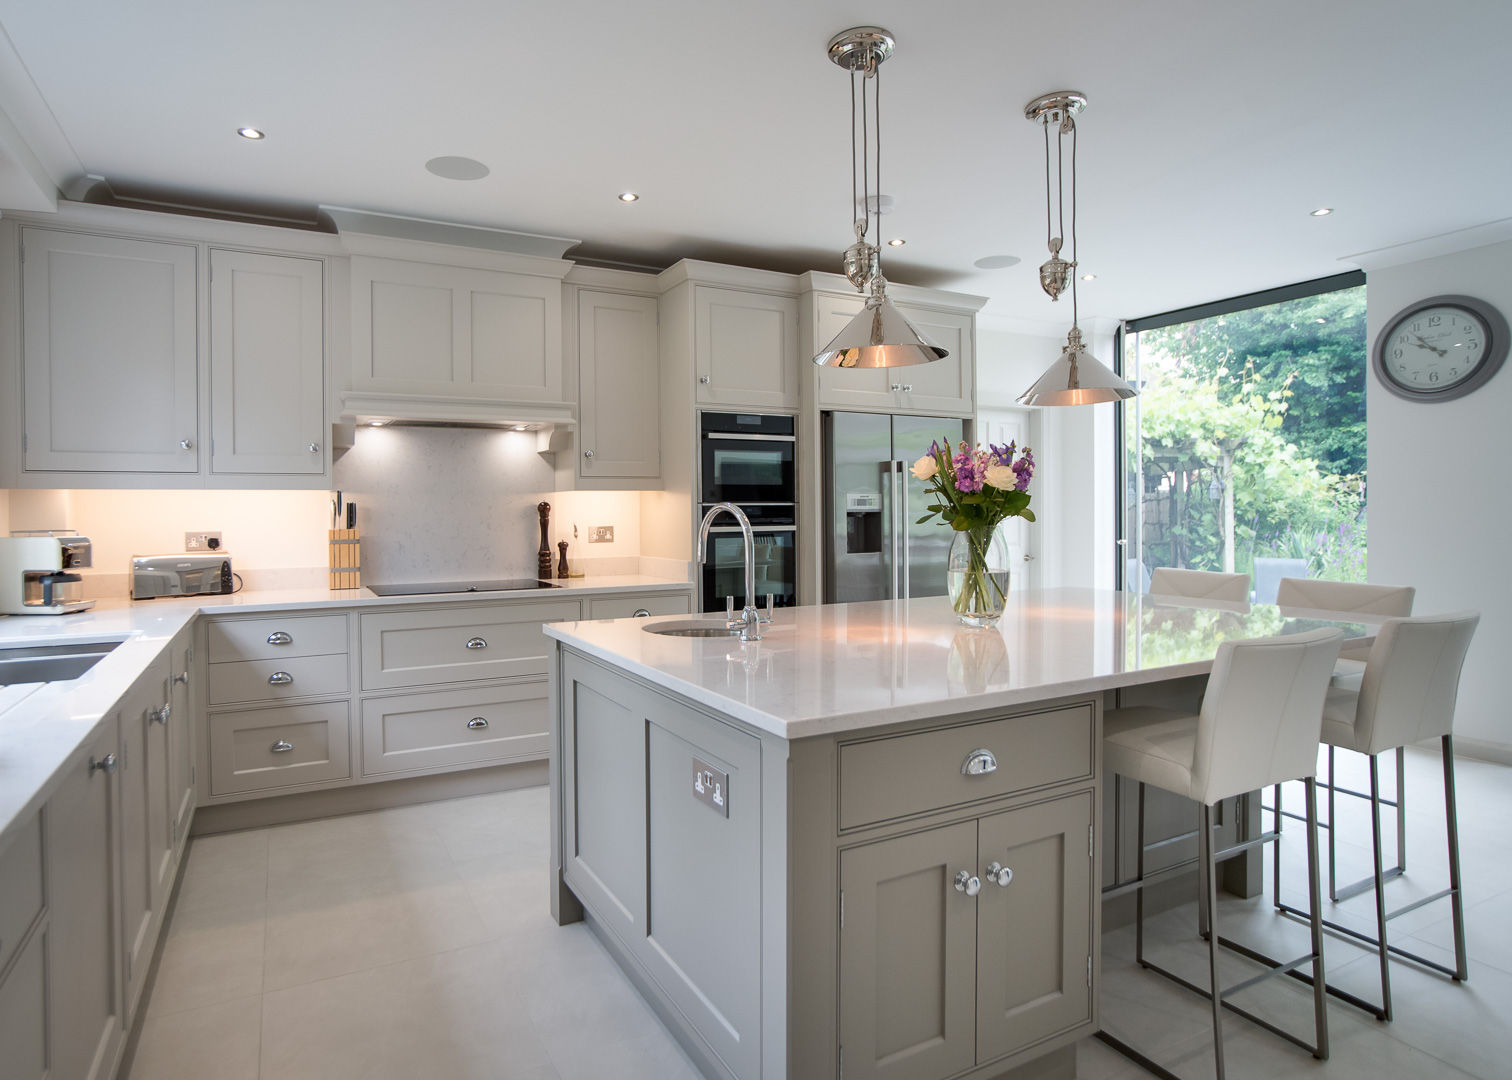 Luxurious, bespoke kitchen by John Ladbury John Ladbury and Company Cocinas integrales white,modern,minimalist,quartz